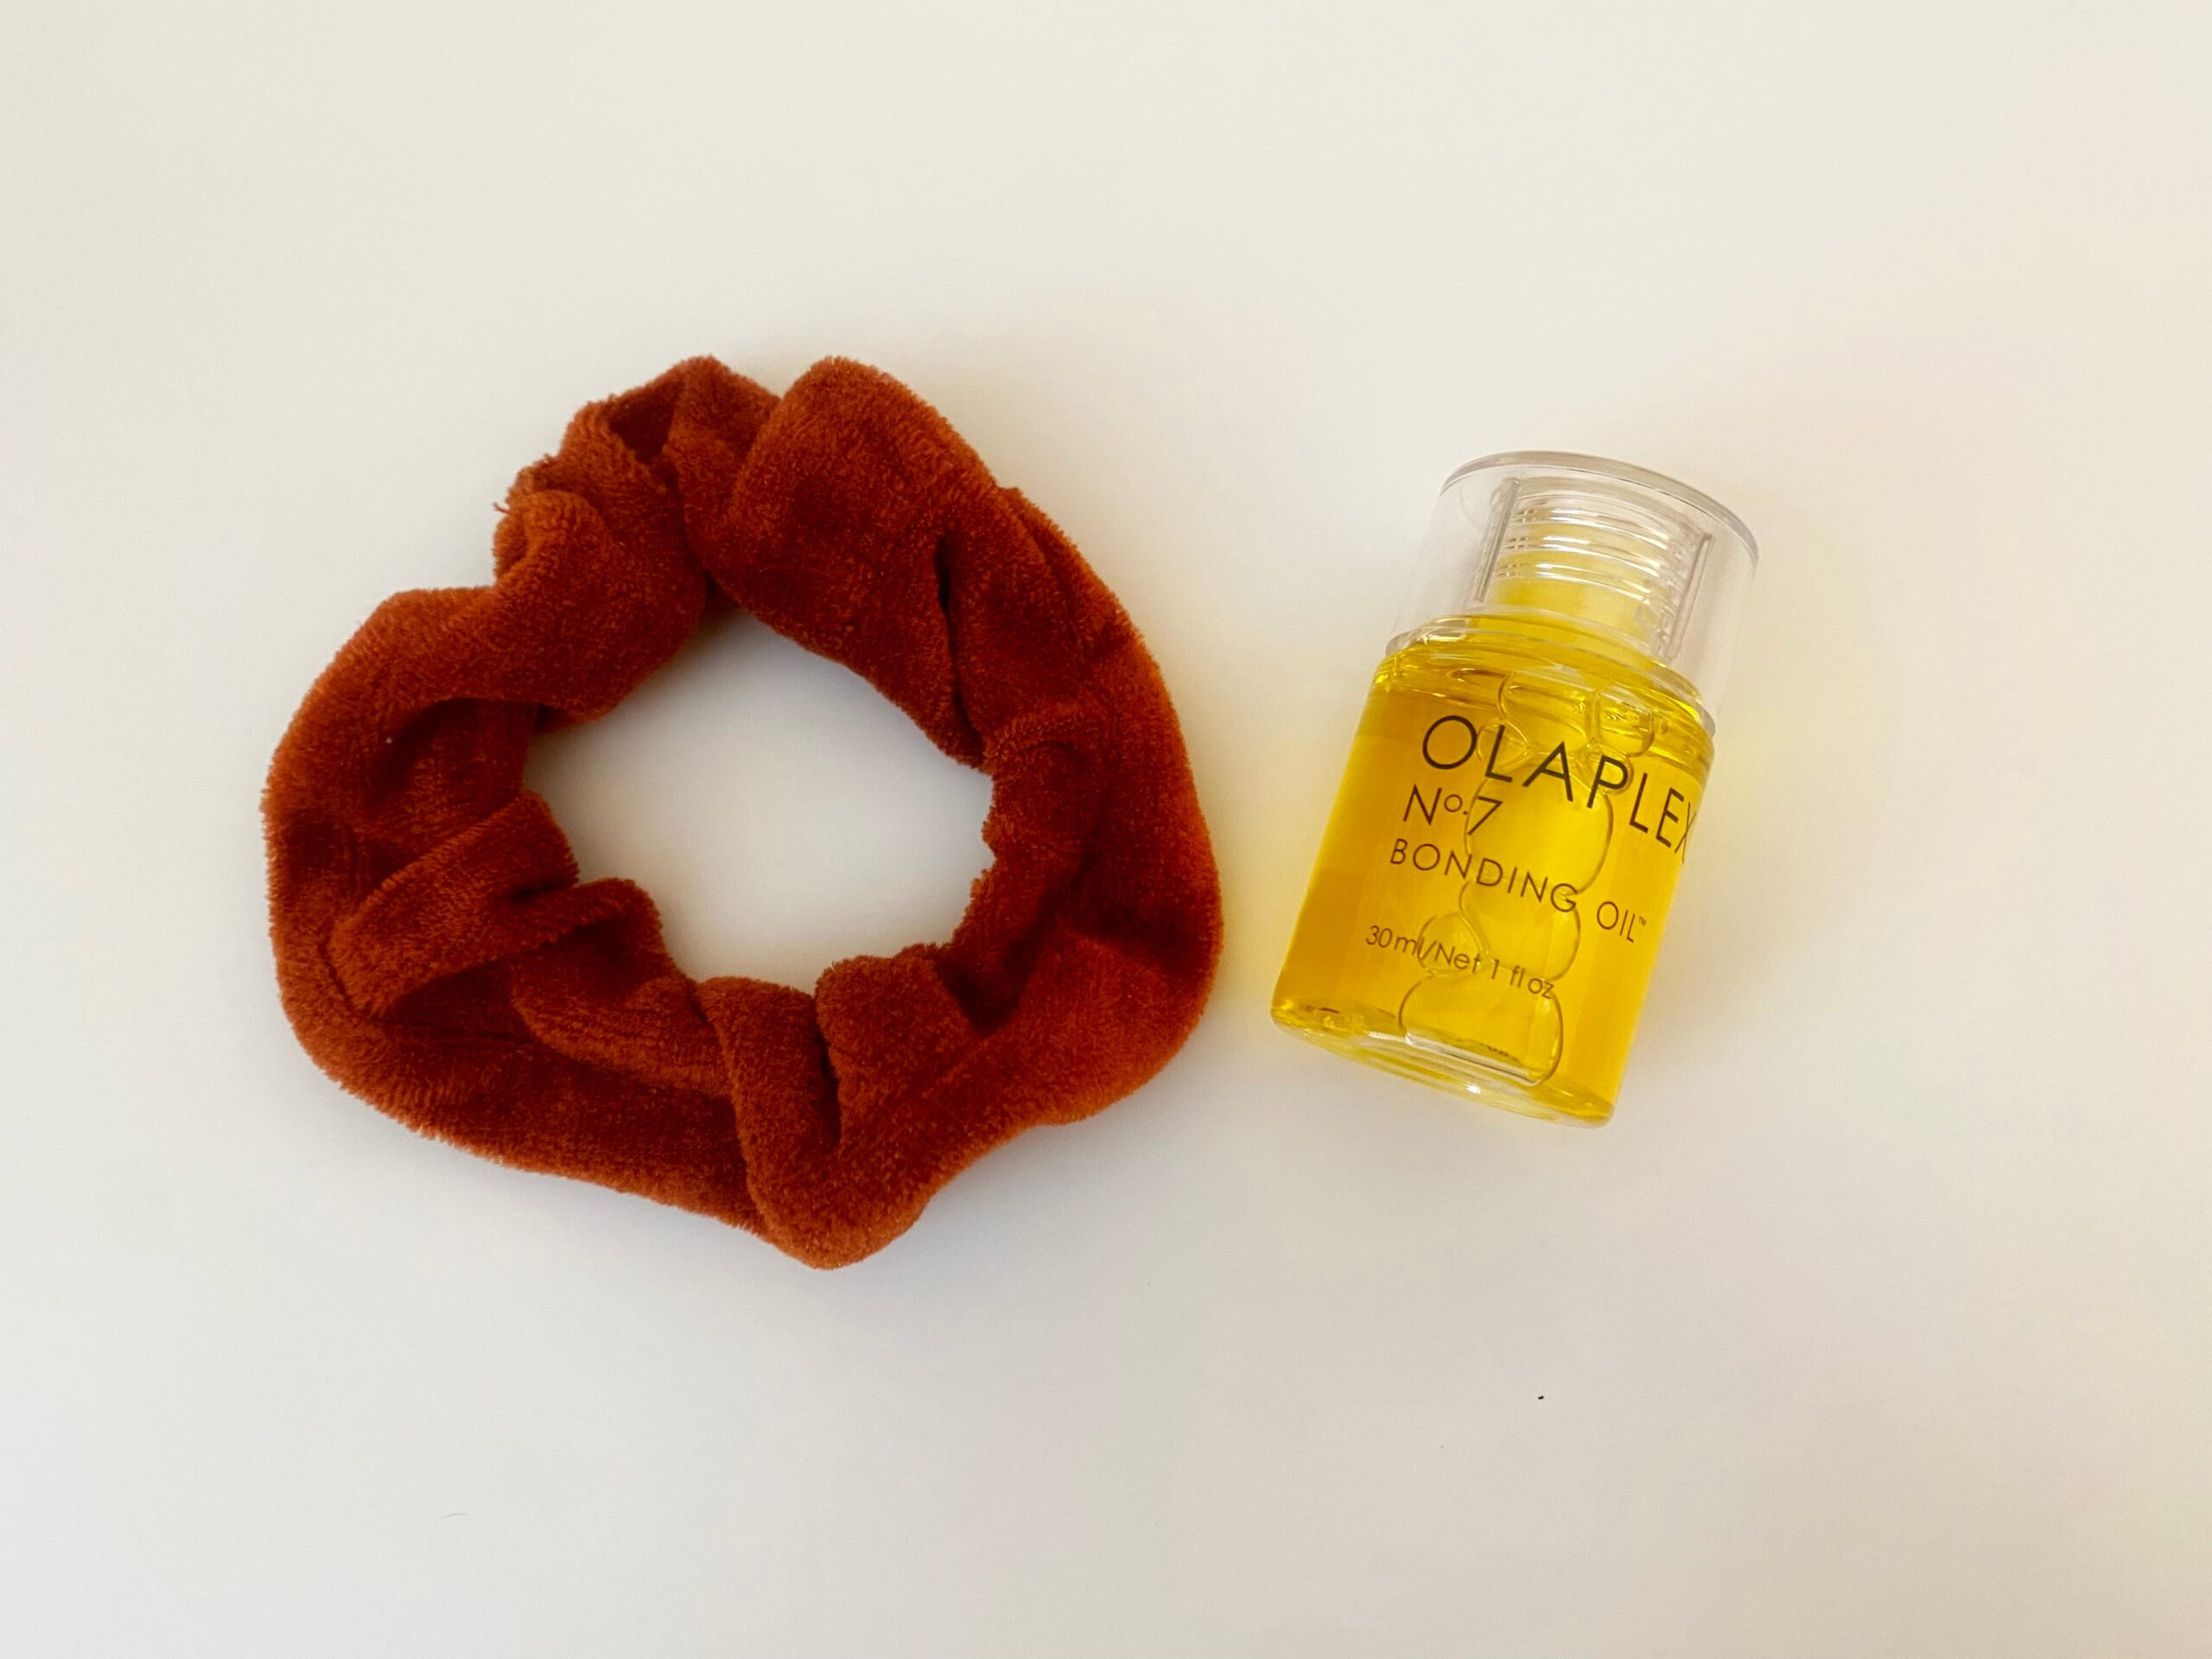 Olaplex Bonding Oil and hair scrunchie